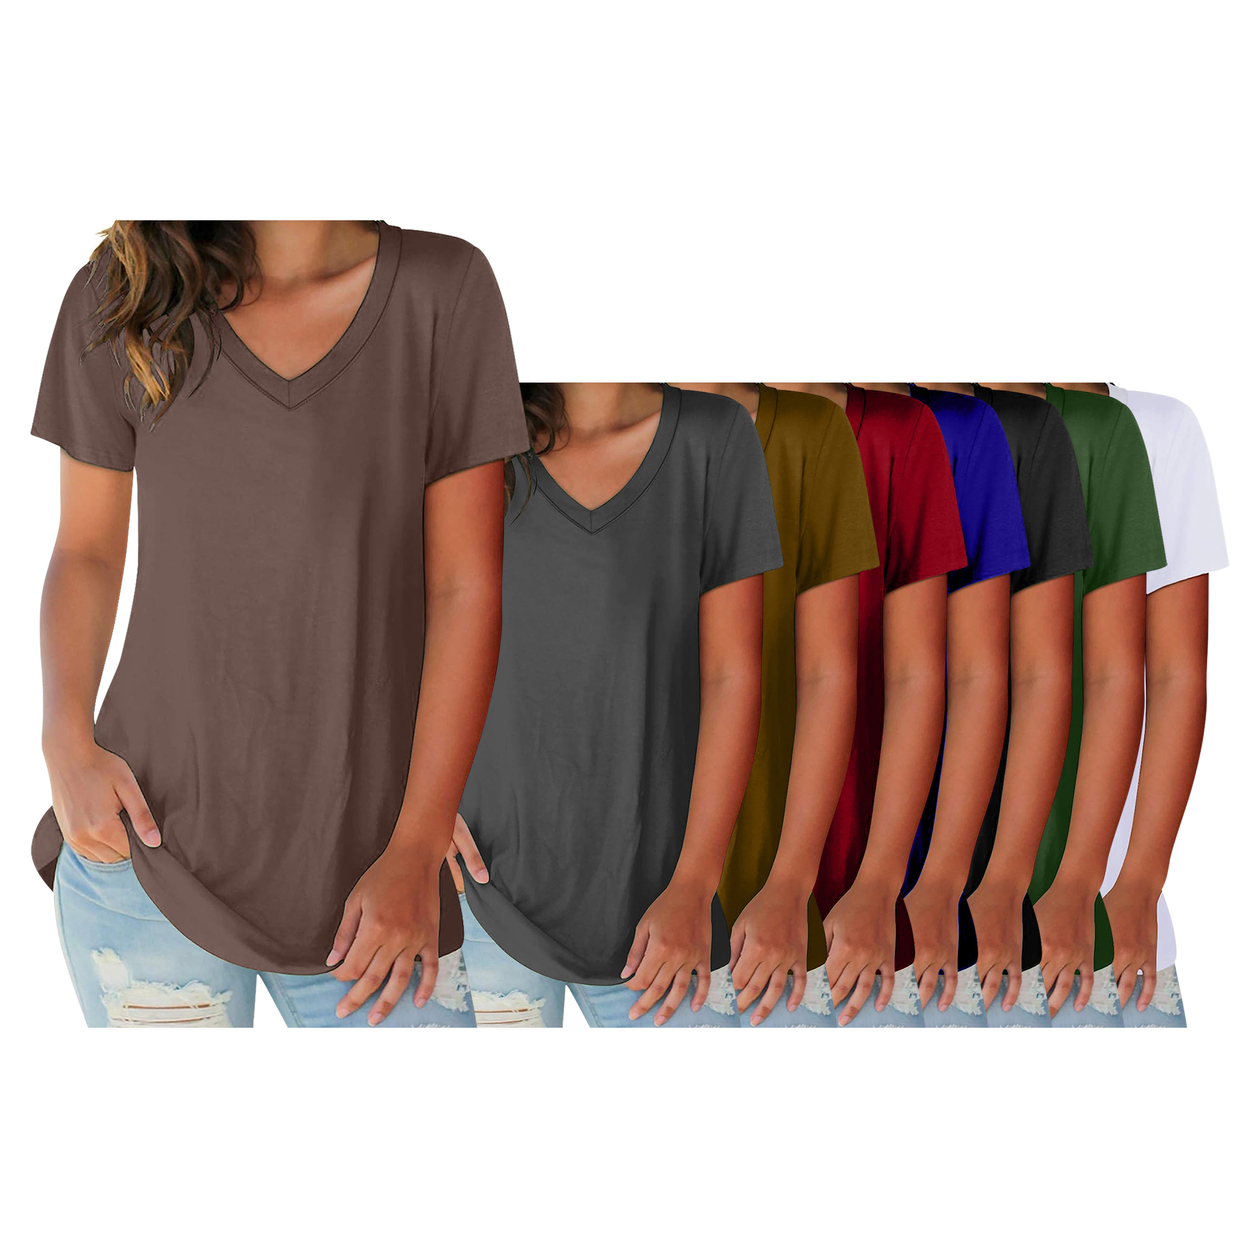 Women's Ultra-Soft Smooth Cotton Blend Basic V-Neck Short Sleeve Shirts - Green, Xx-large